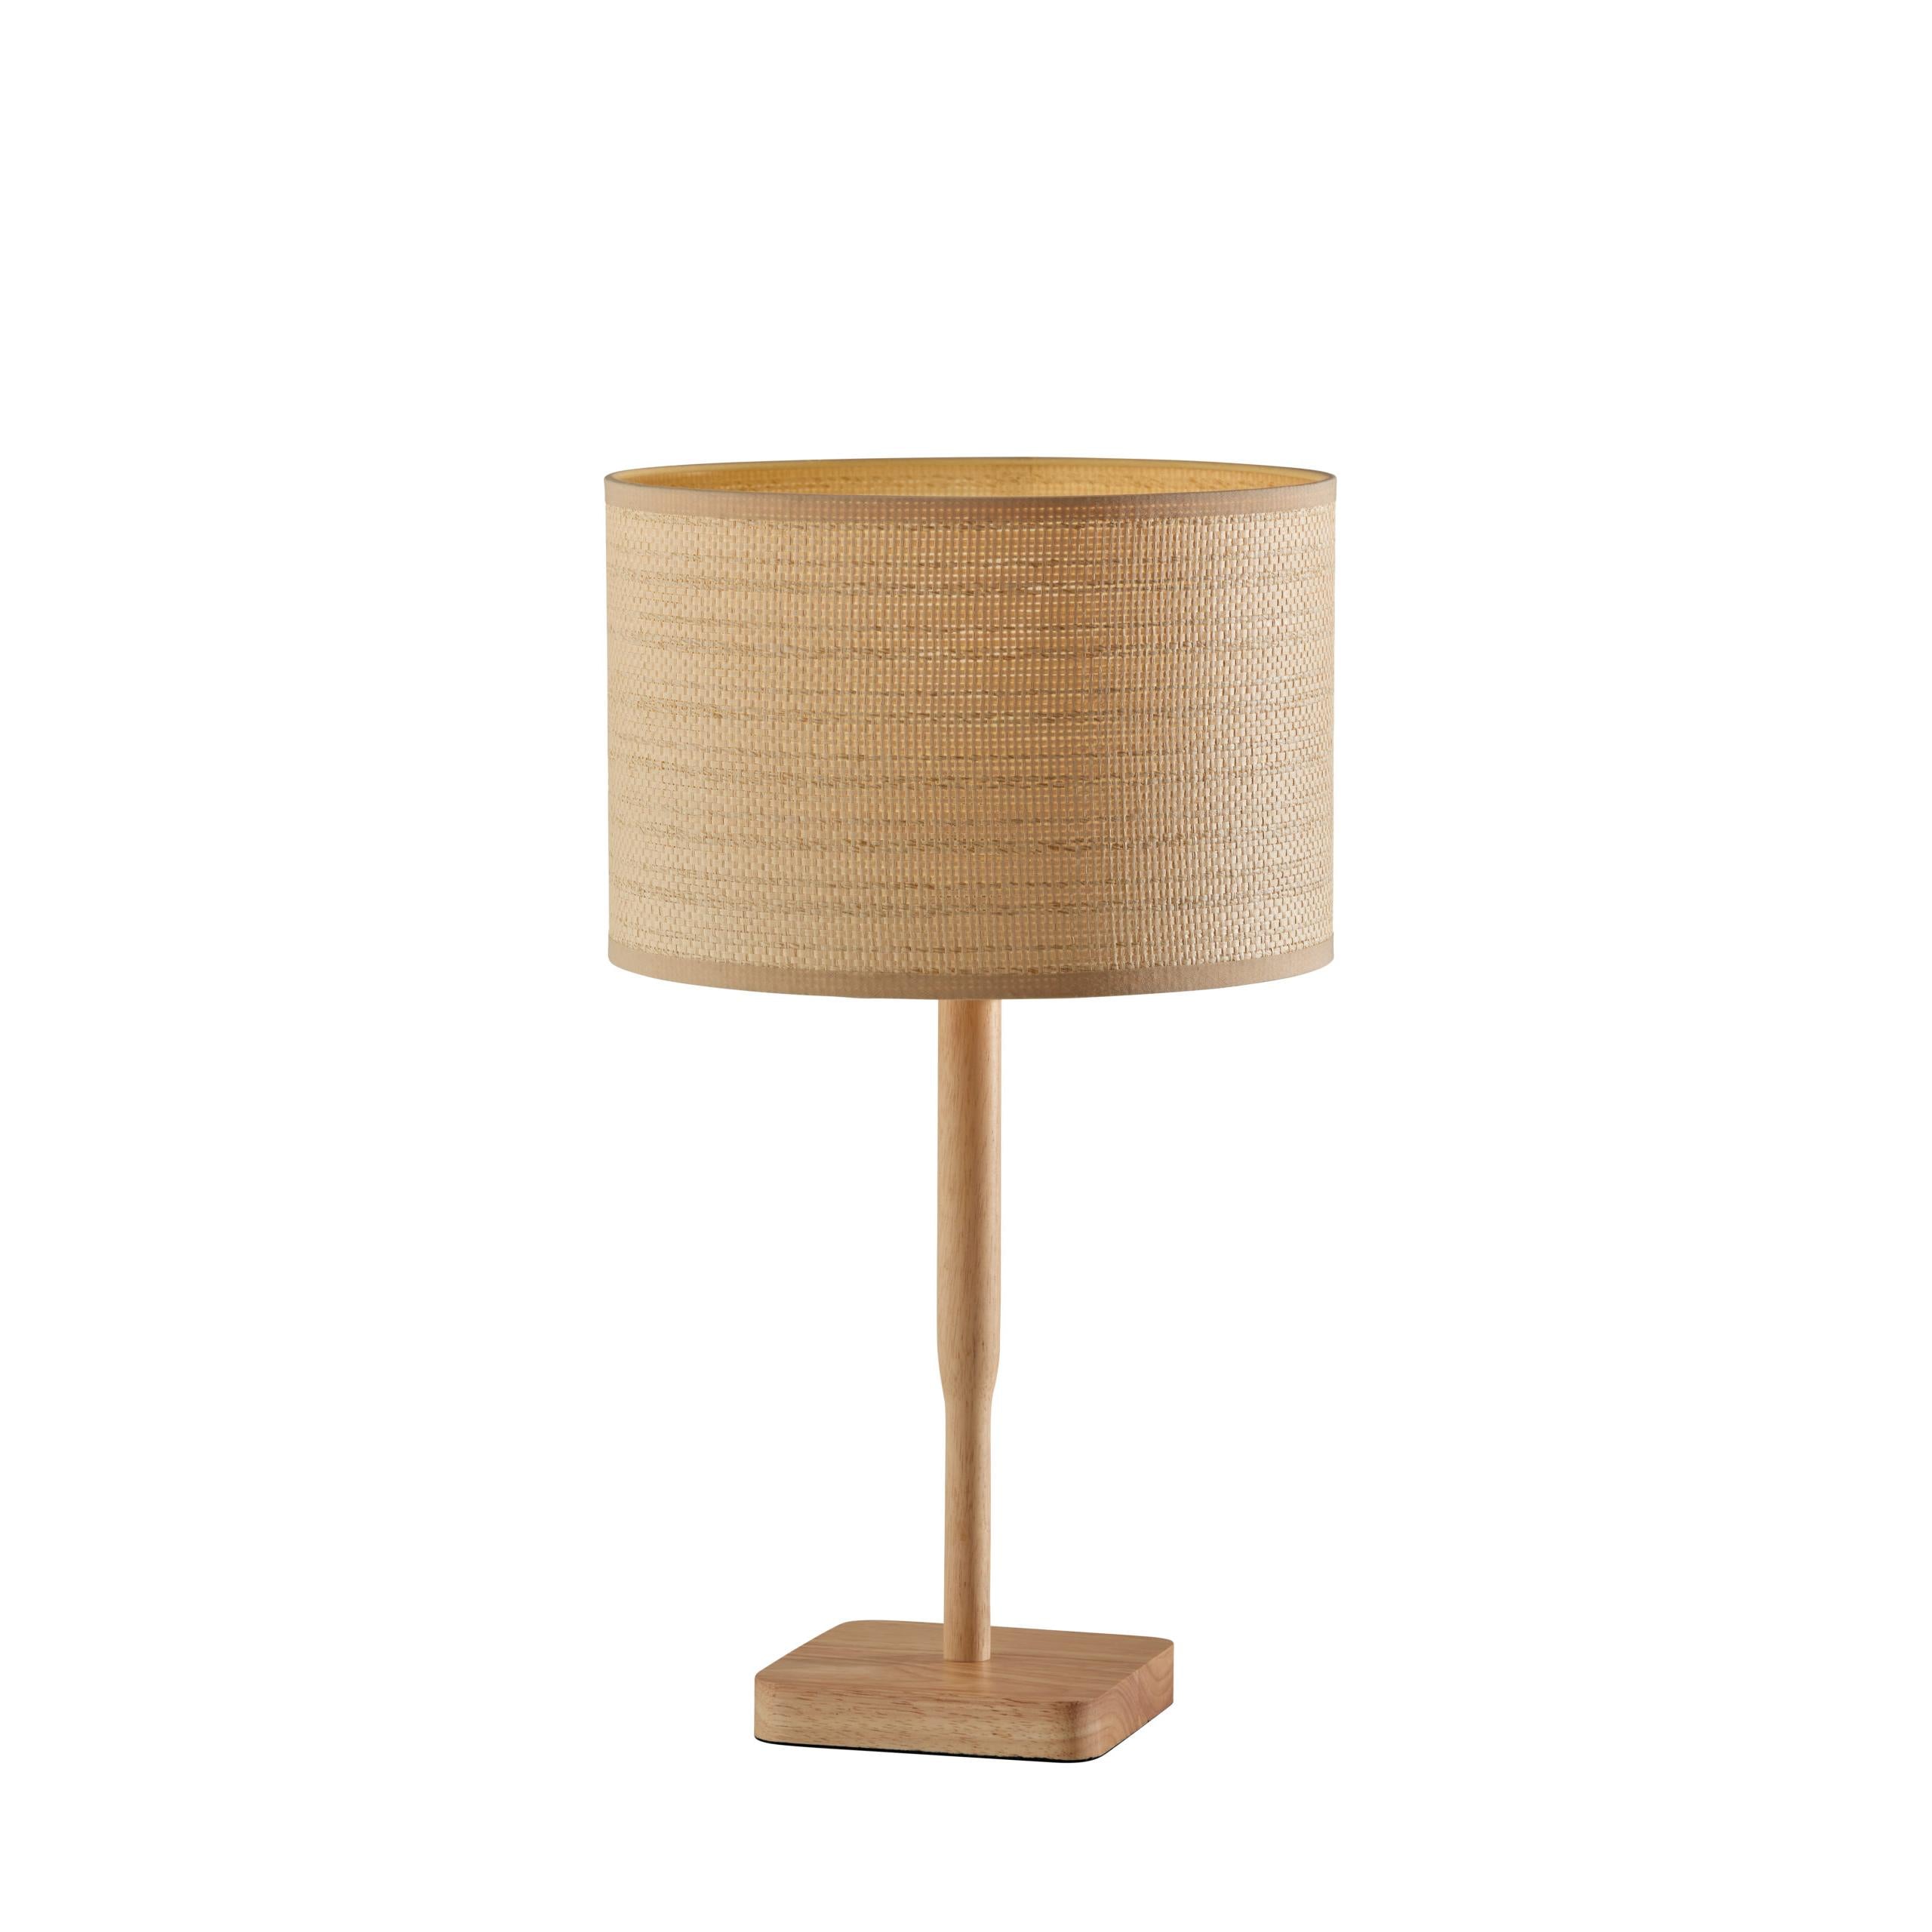 Adesso Ellis Table Lamp - Woven